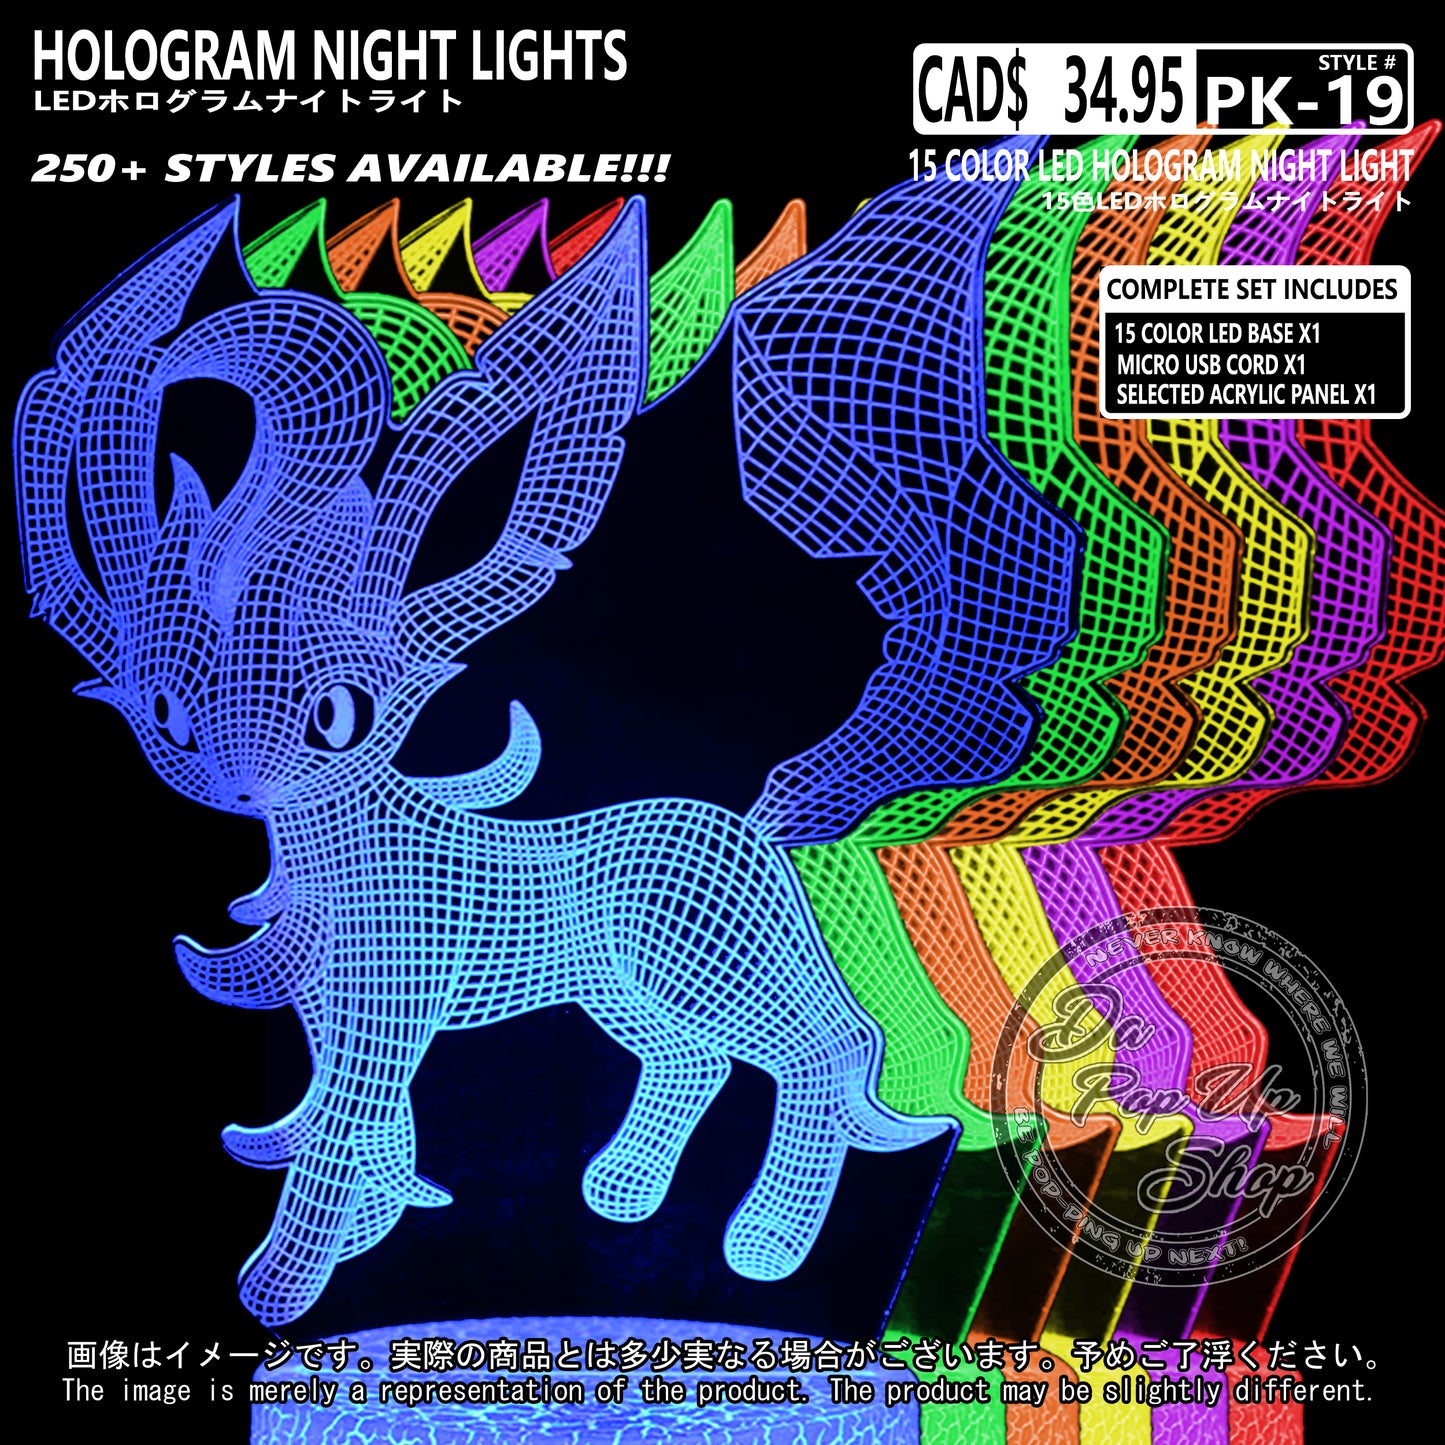 (PKM-19) LEAFEON Pokemon Hologram LED Night Light